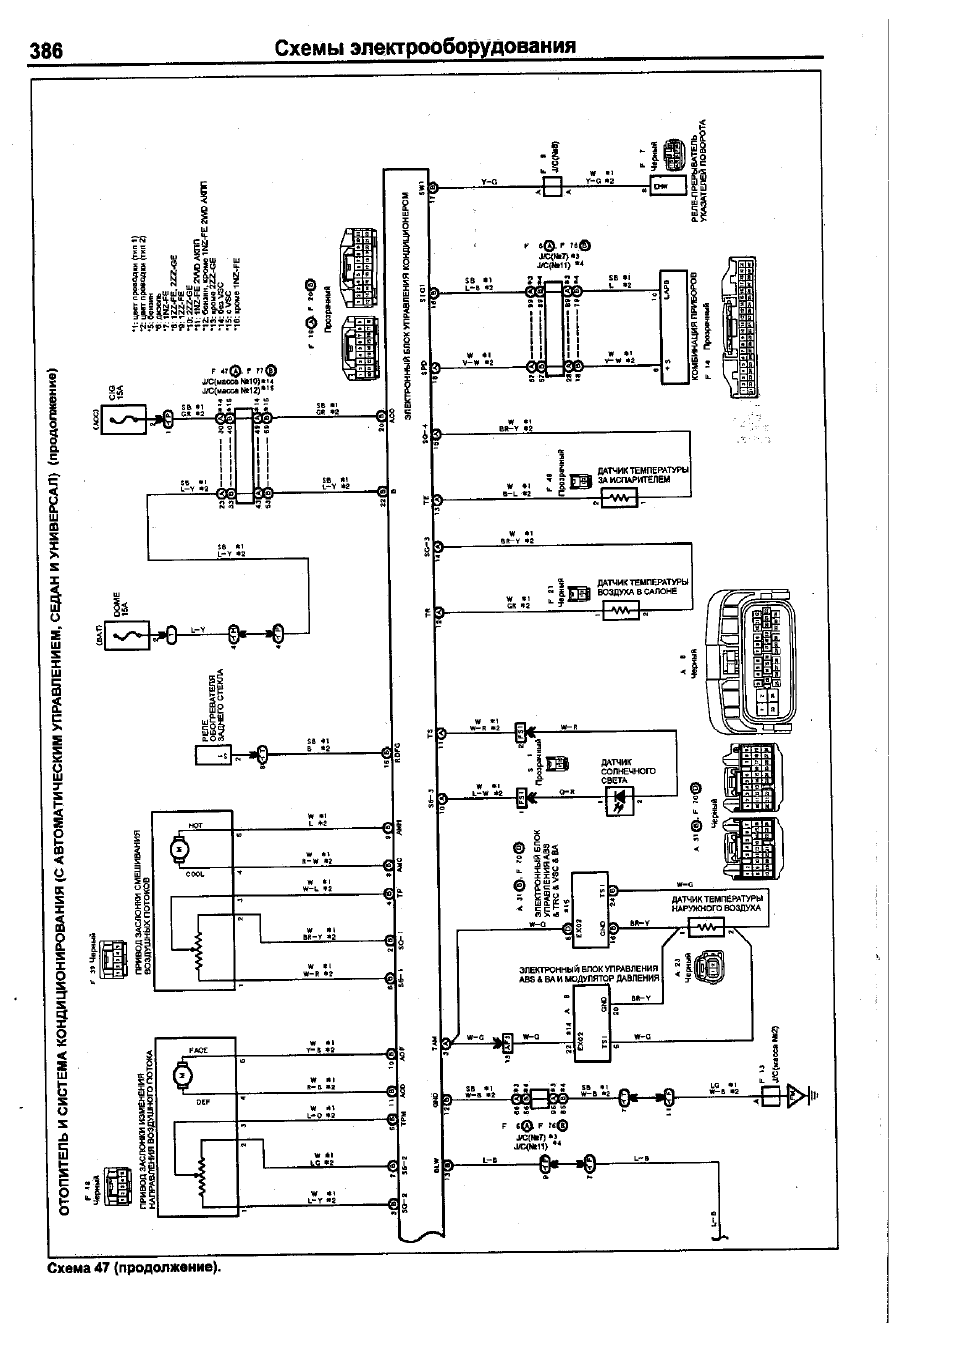 Инструкция по эксплуатации TOYOTA Corolla 2000-2002 | Страница 378 / 390